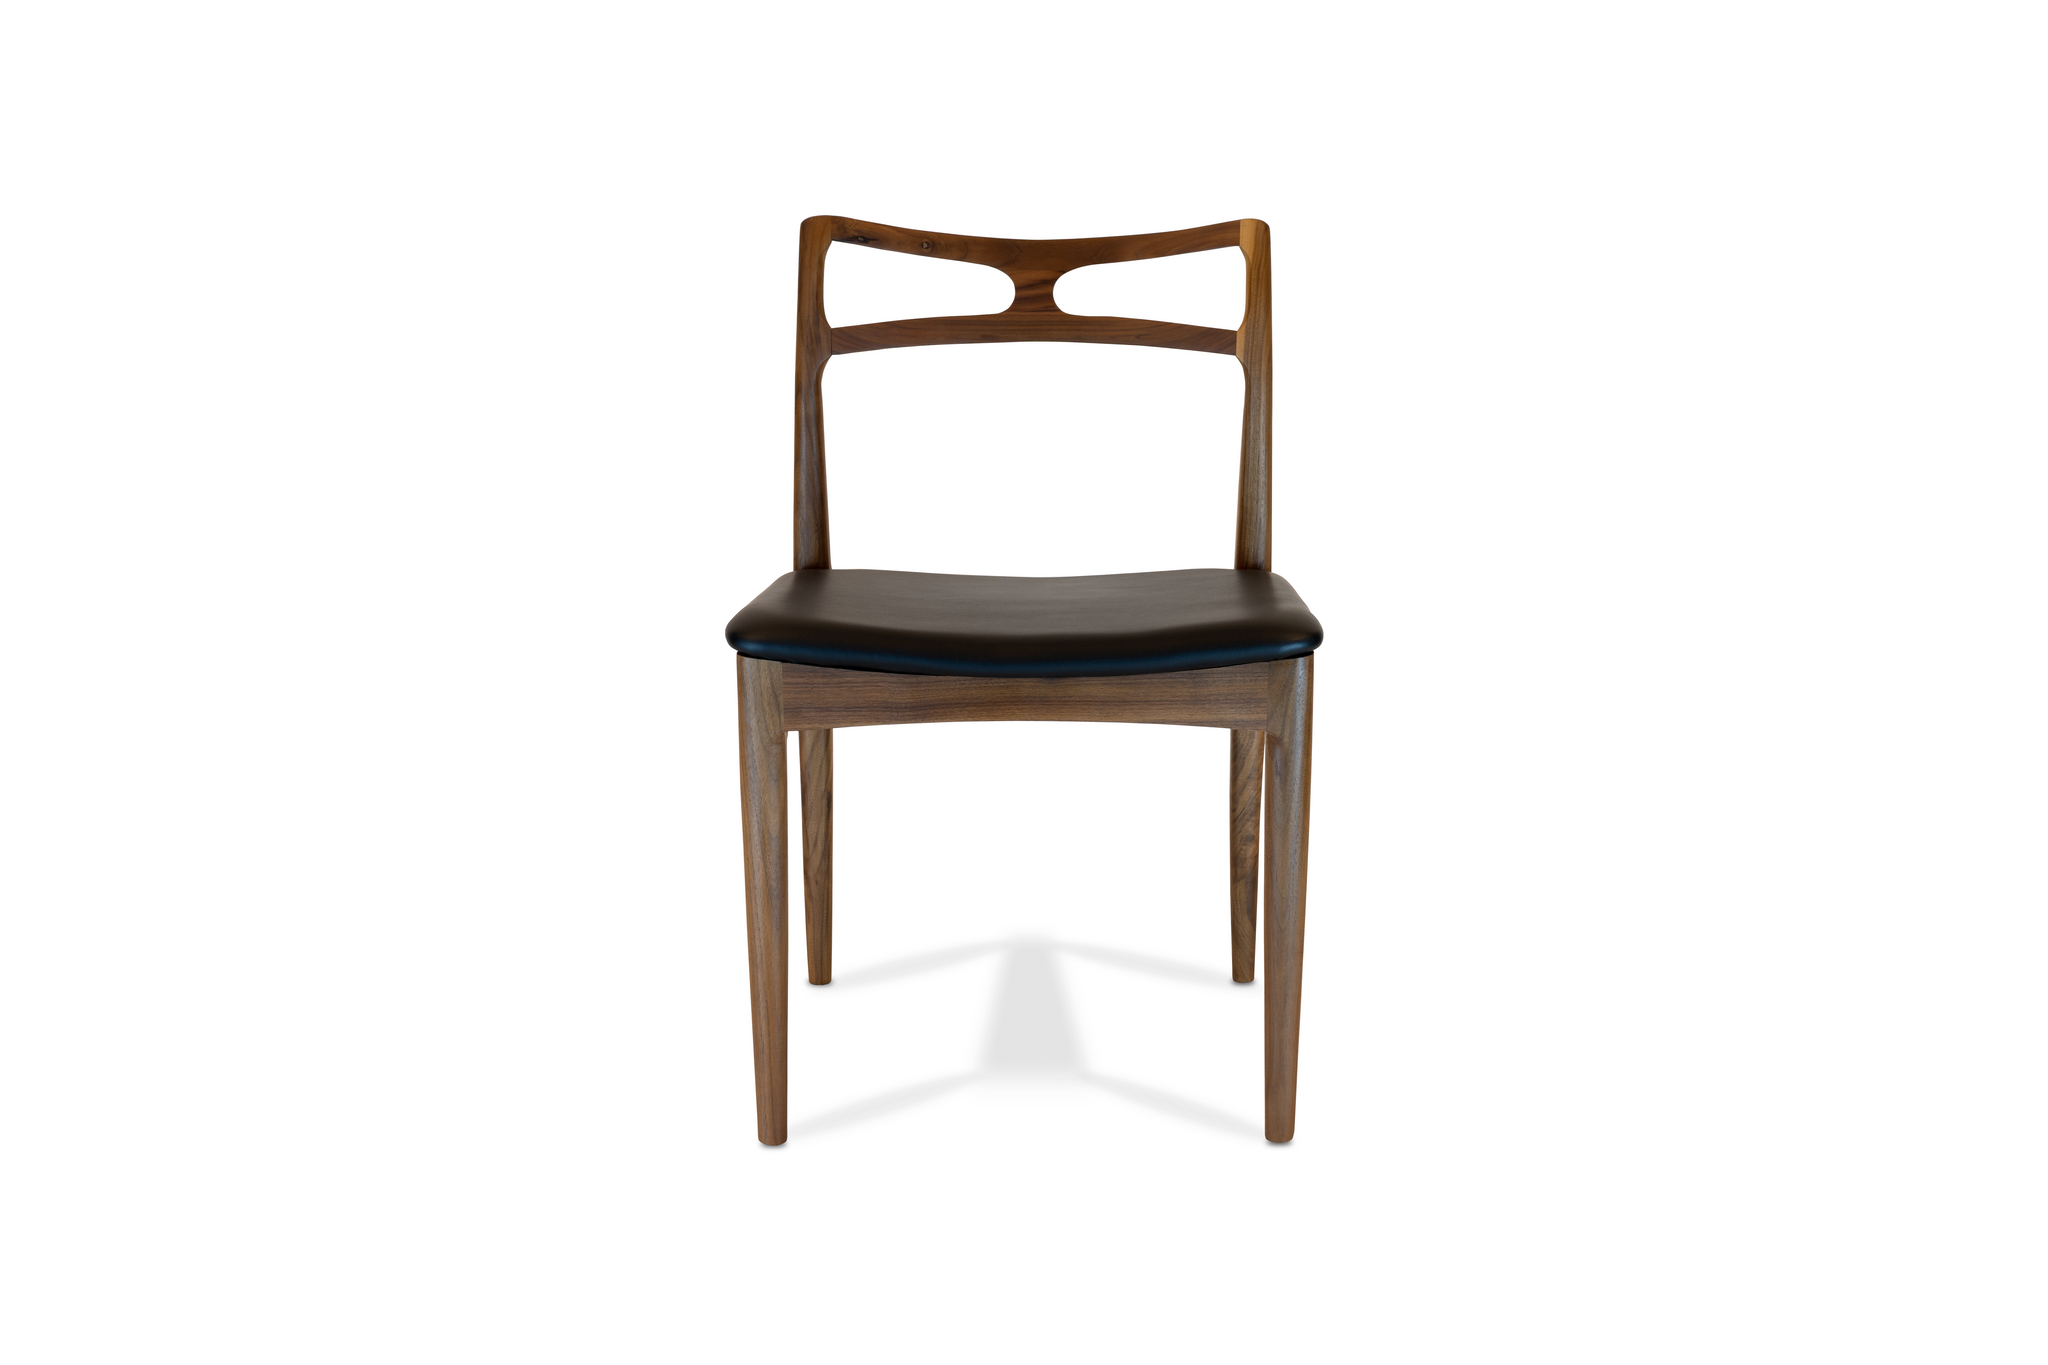 Arni Black Leather Chair - Manhattan Label